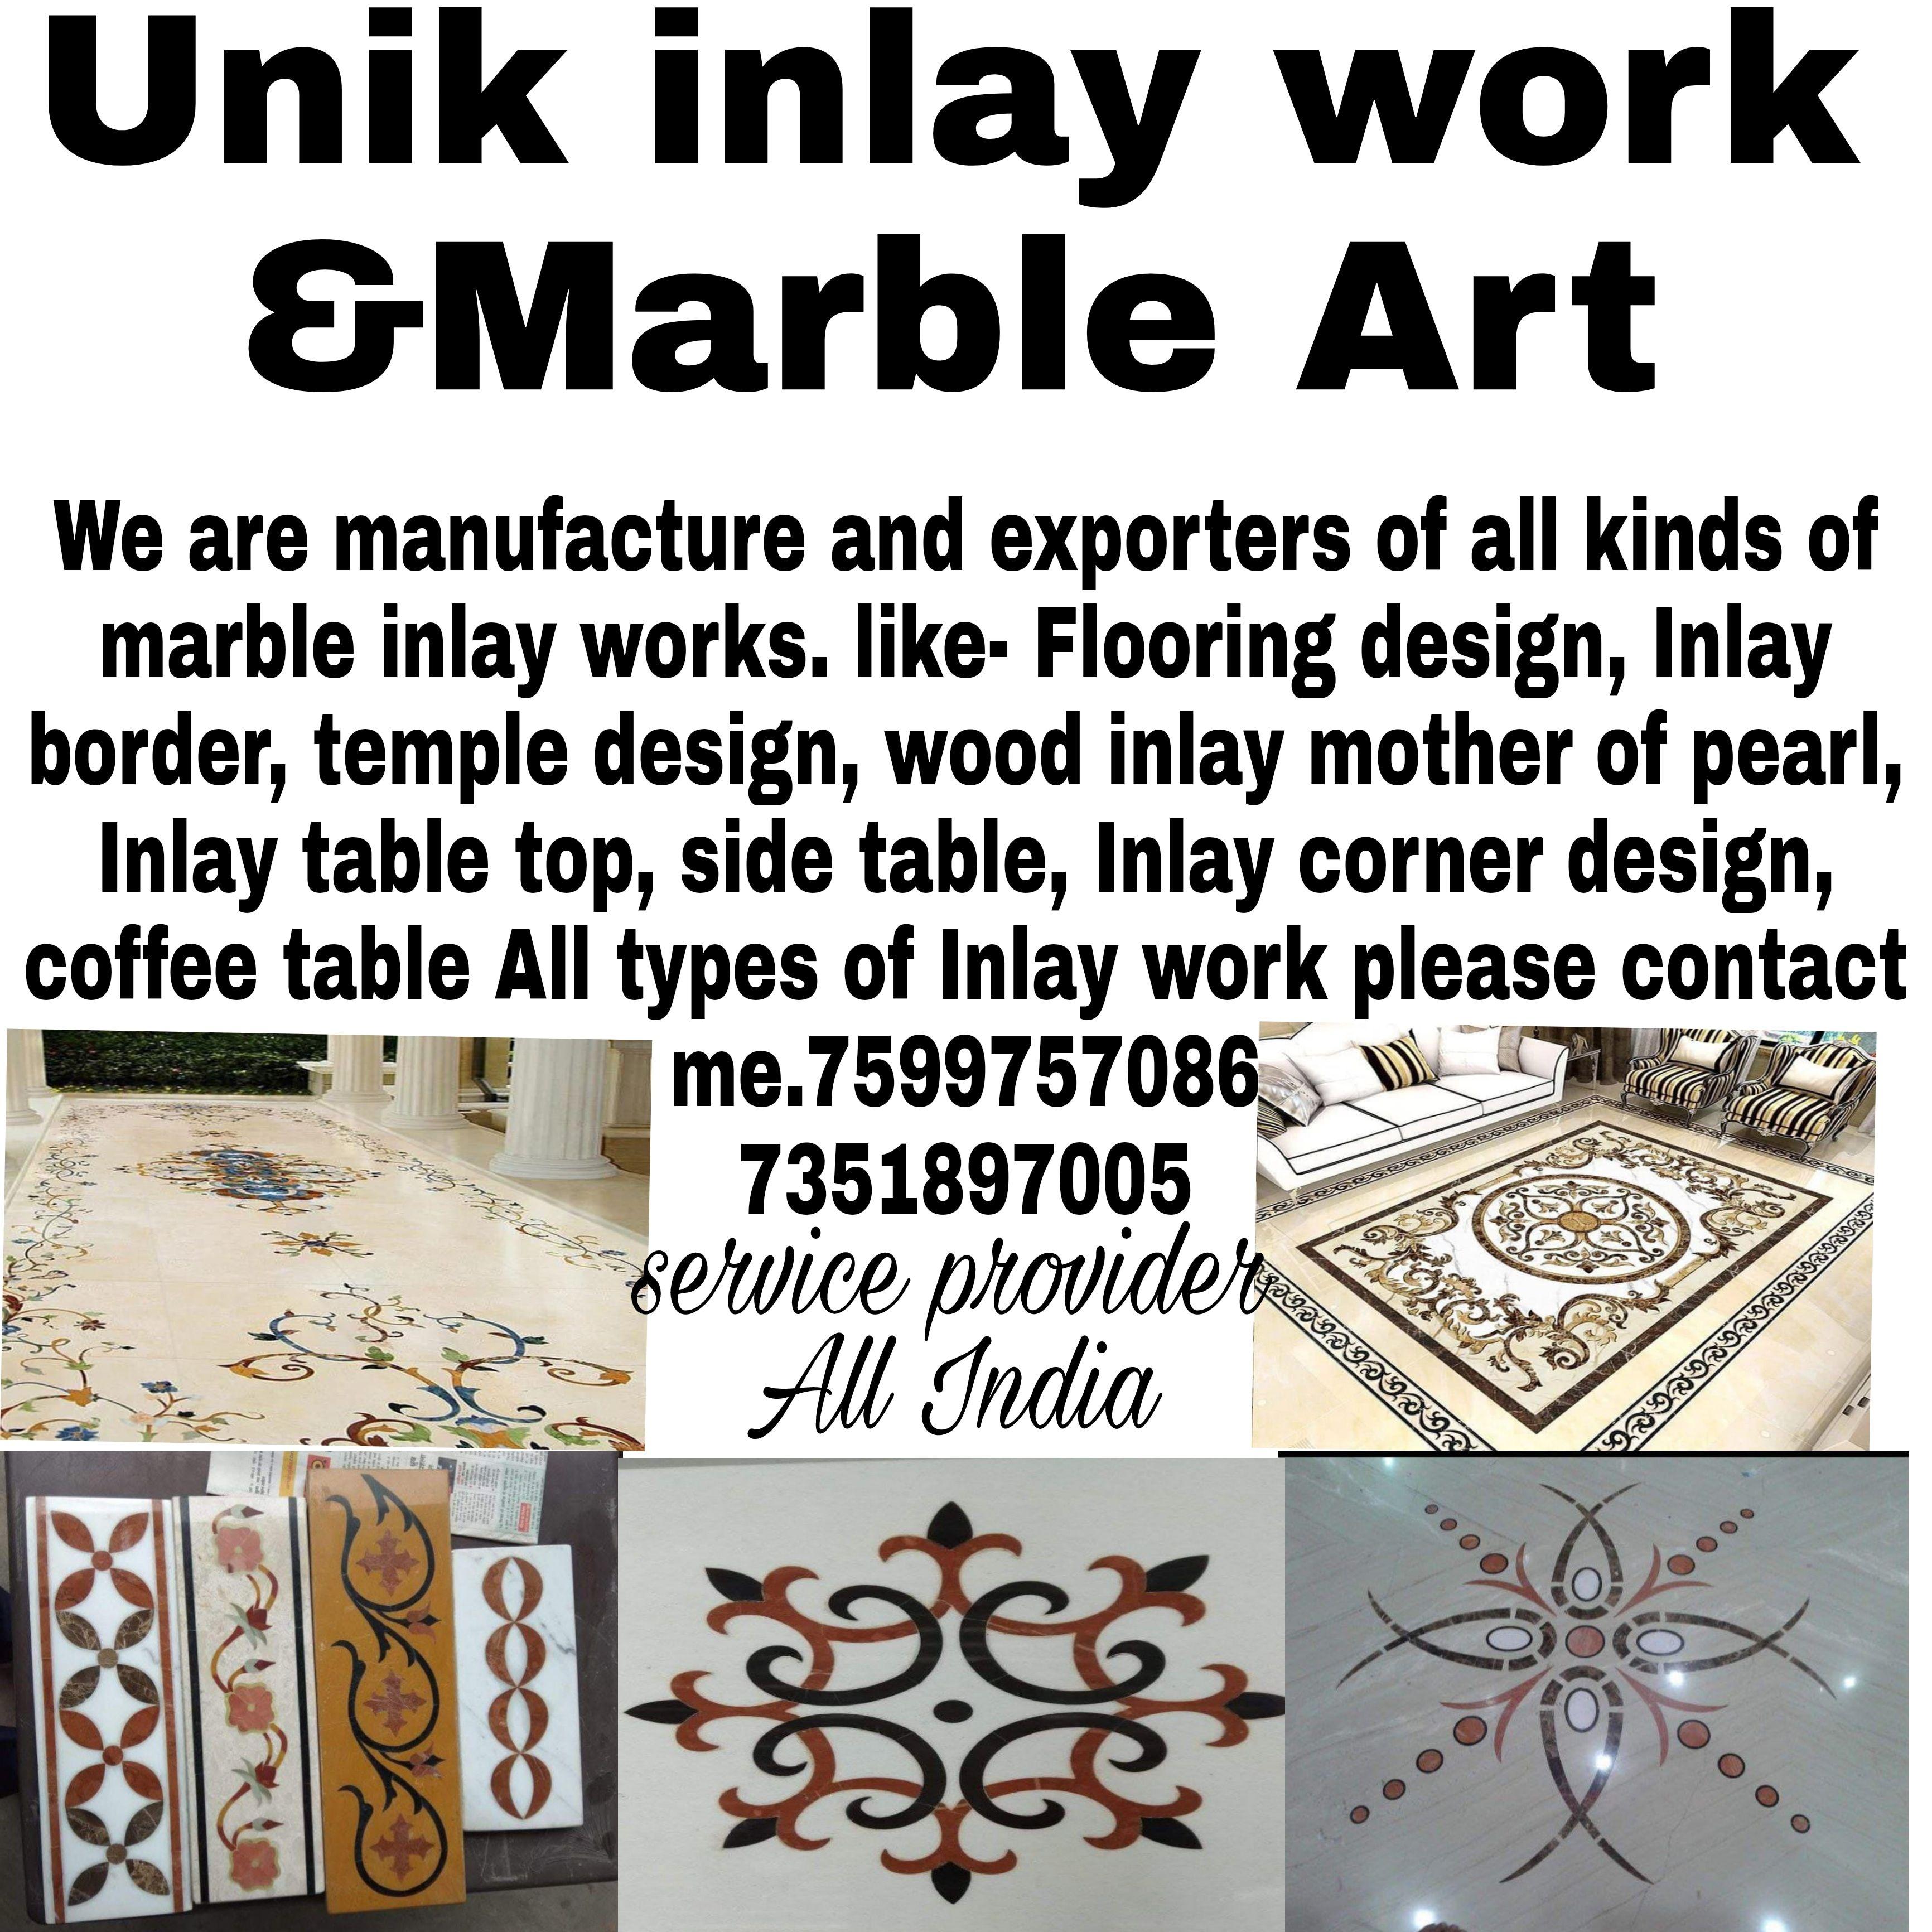 UNIK INLAY WORK & MARBLE ART